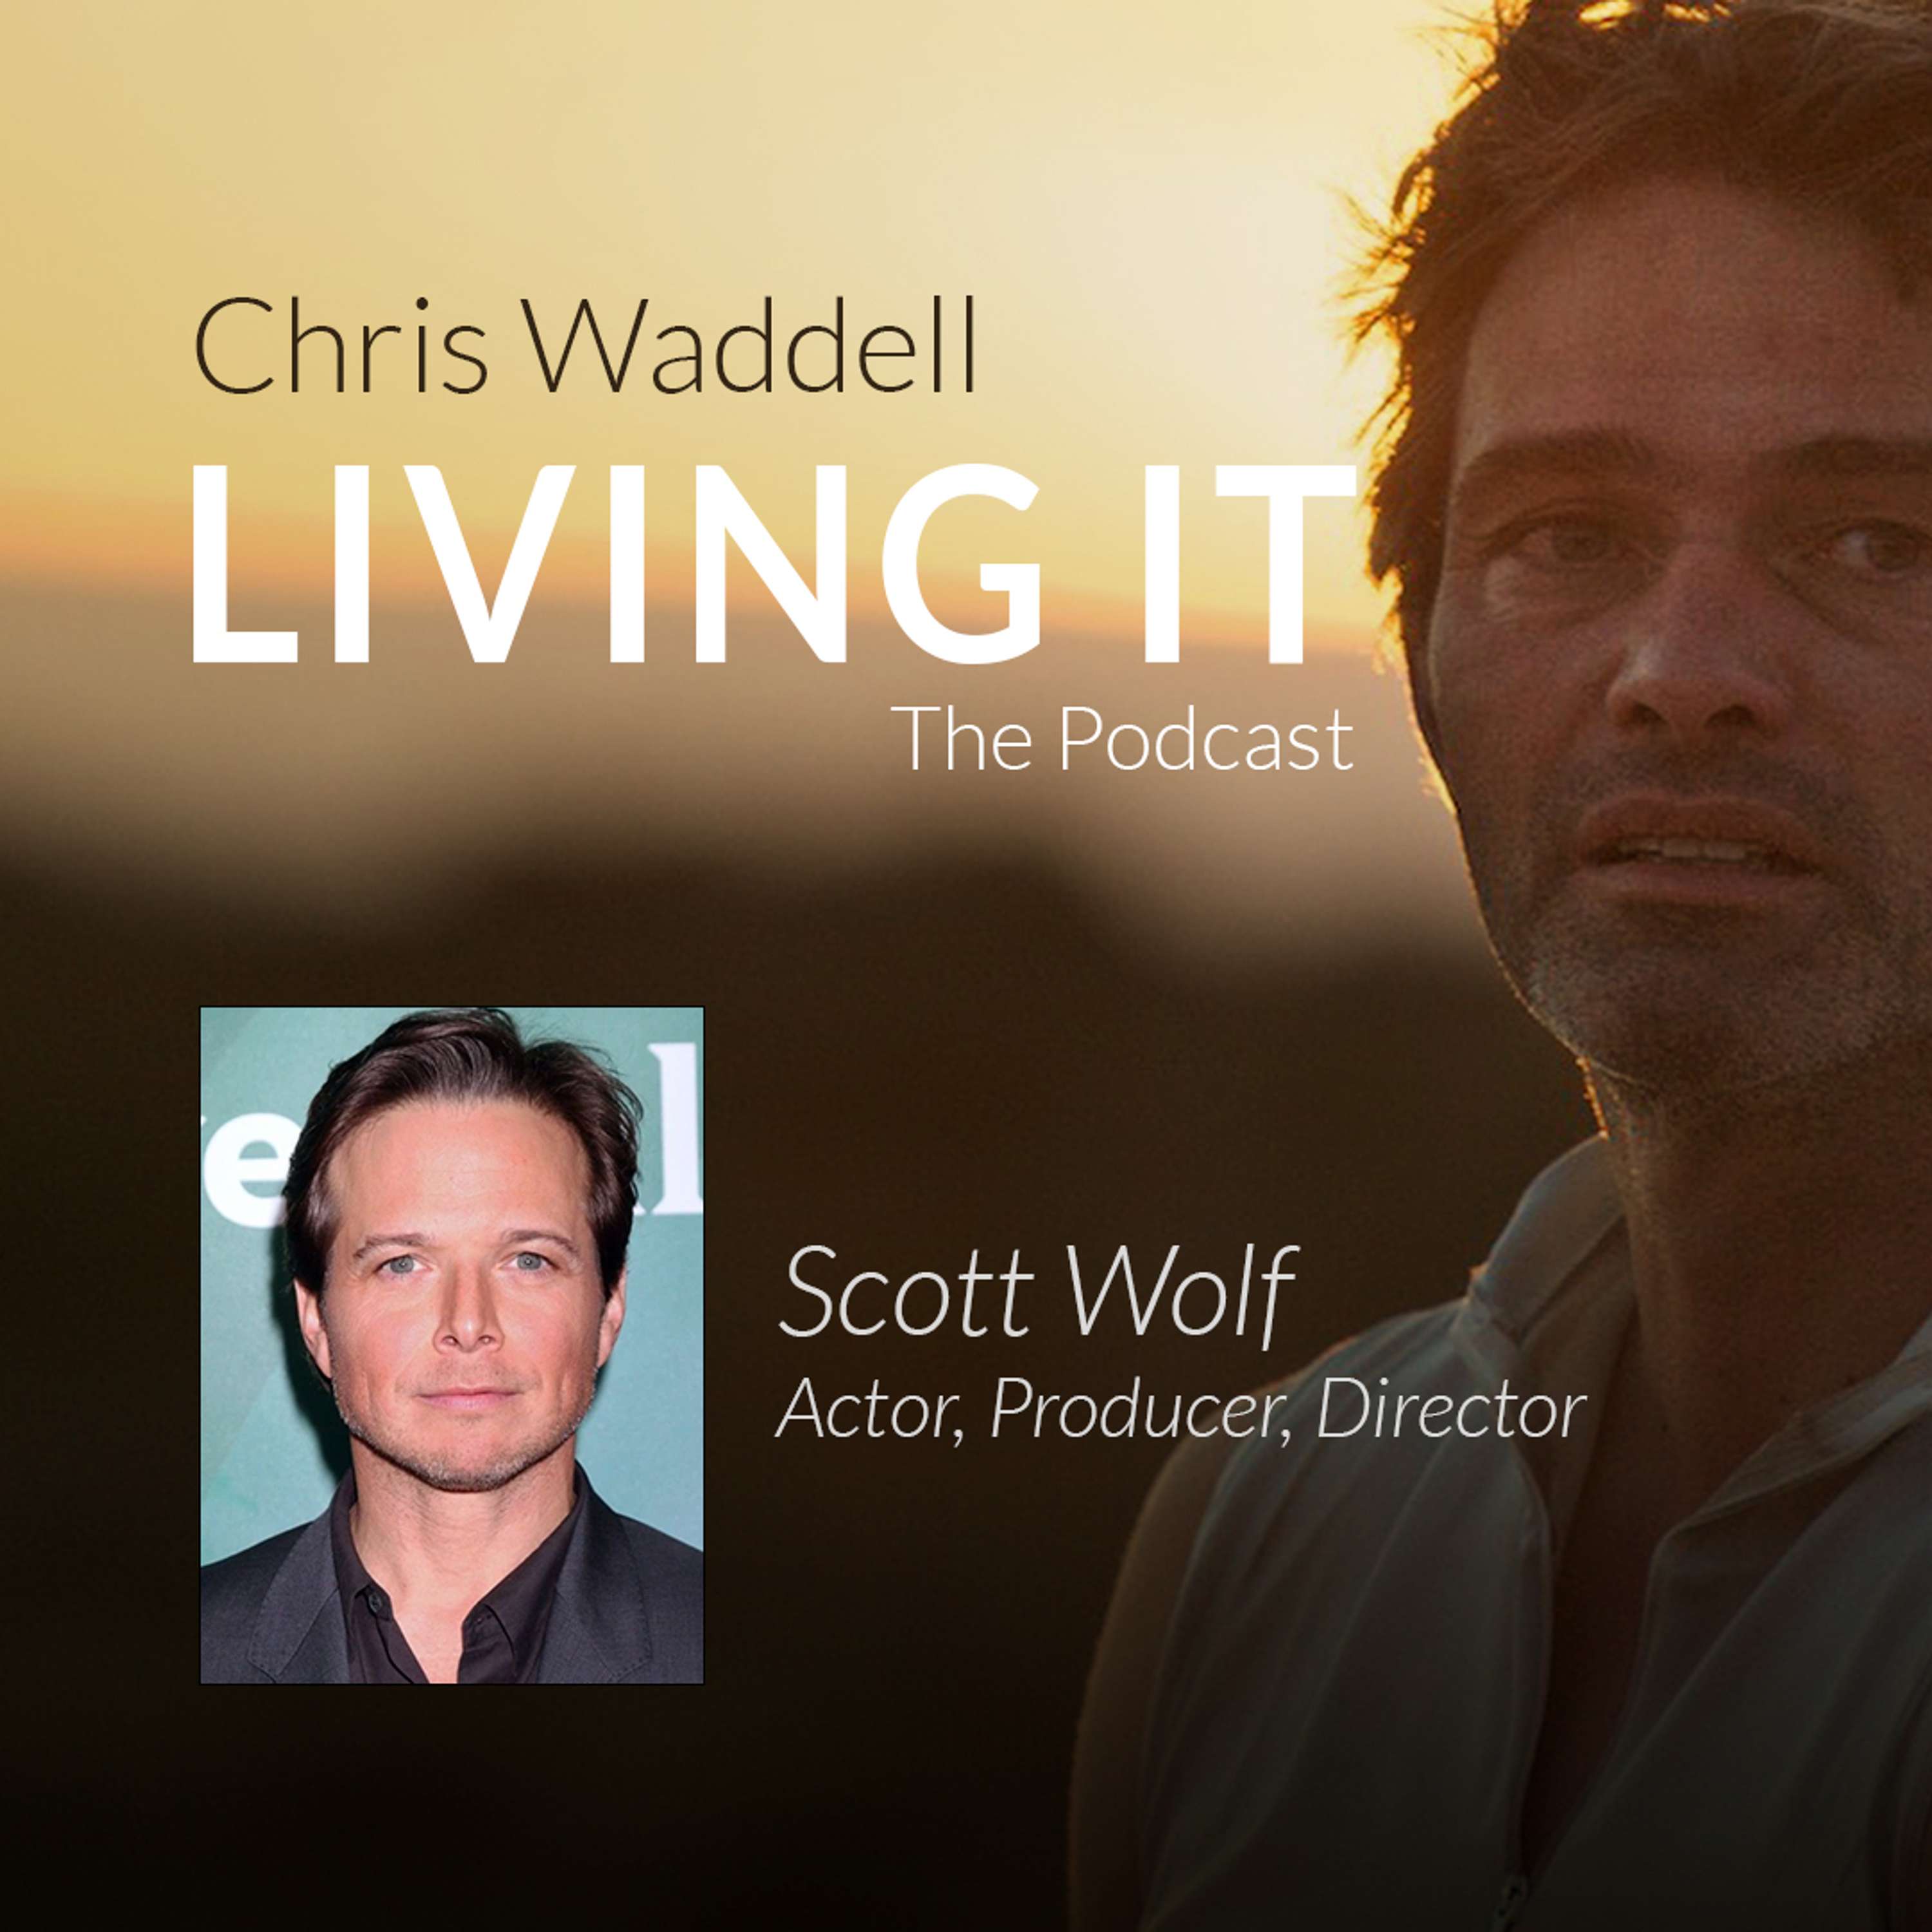 Scott Wolf - Actor, Producer, Director